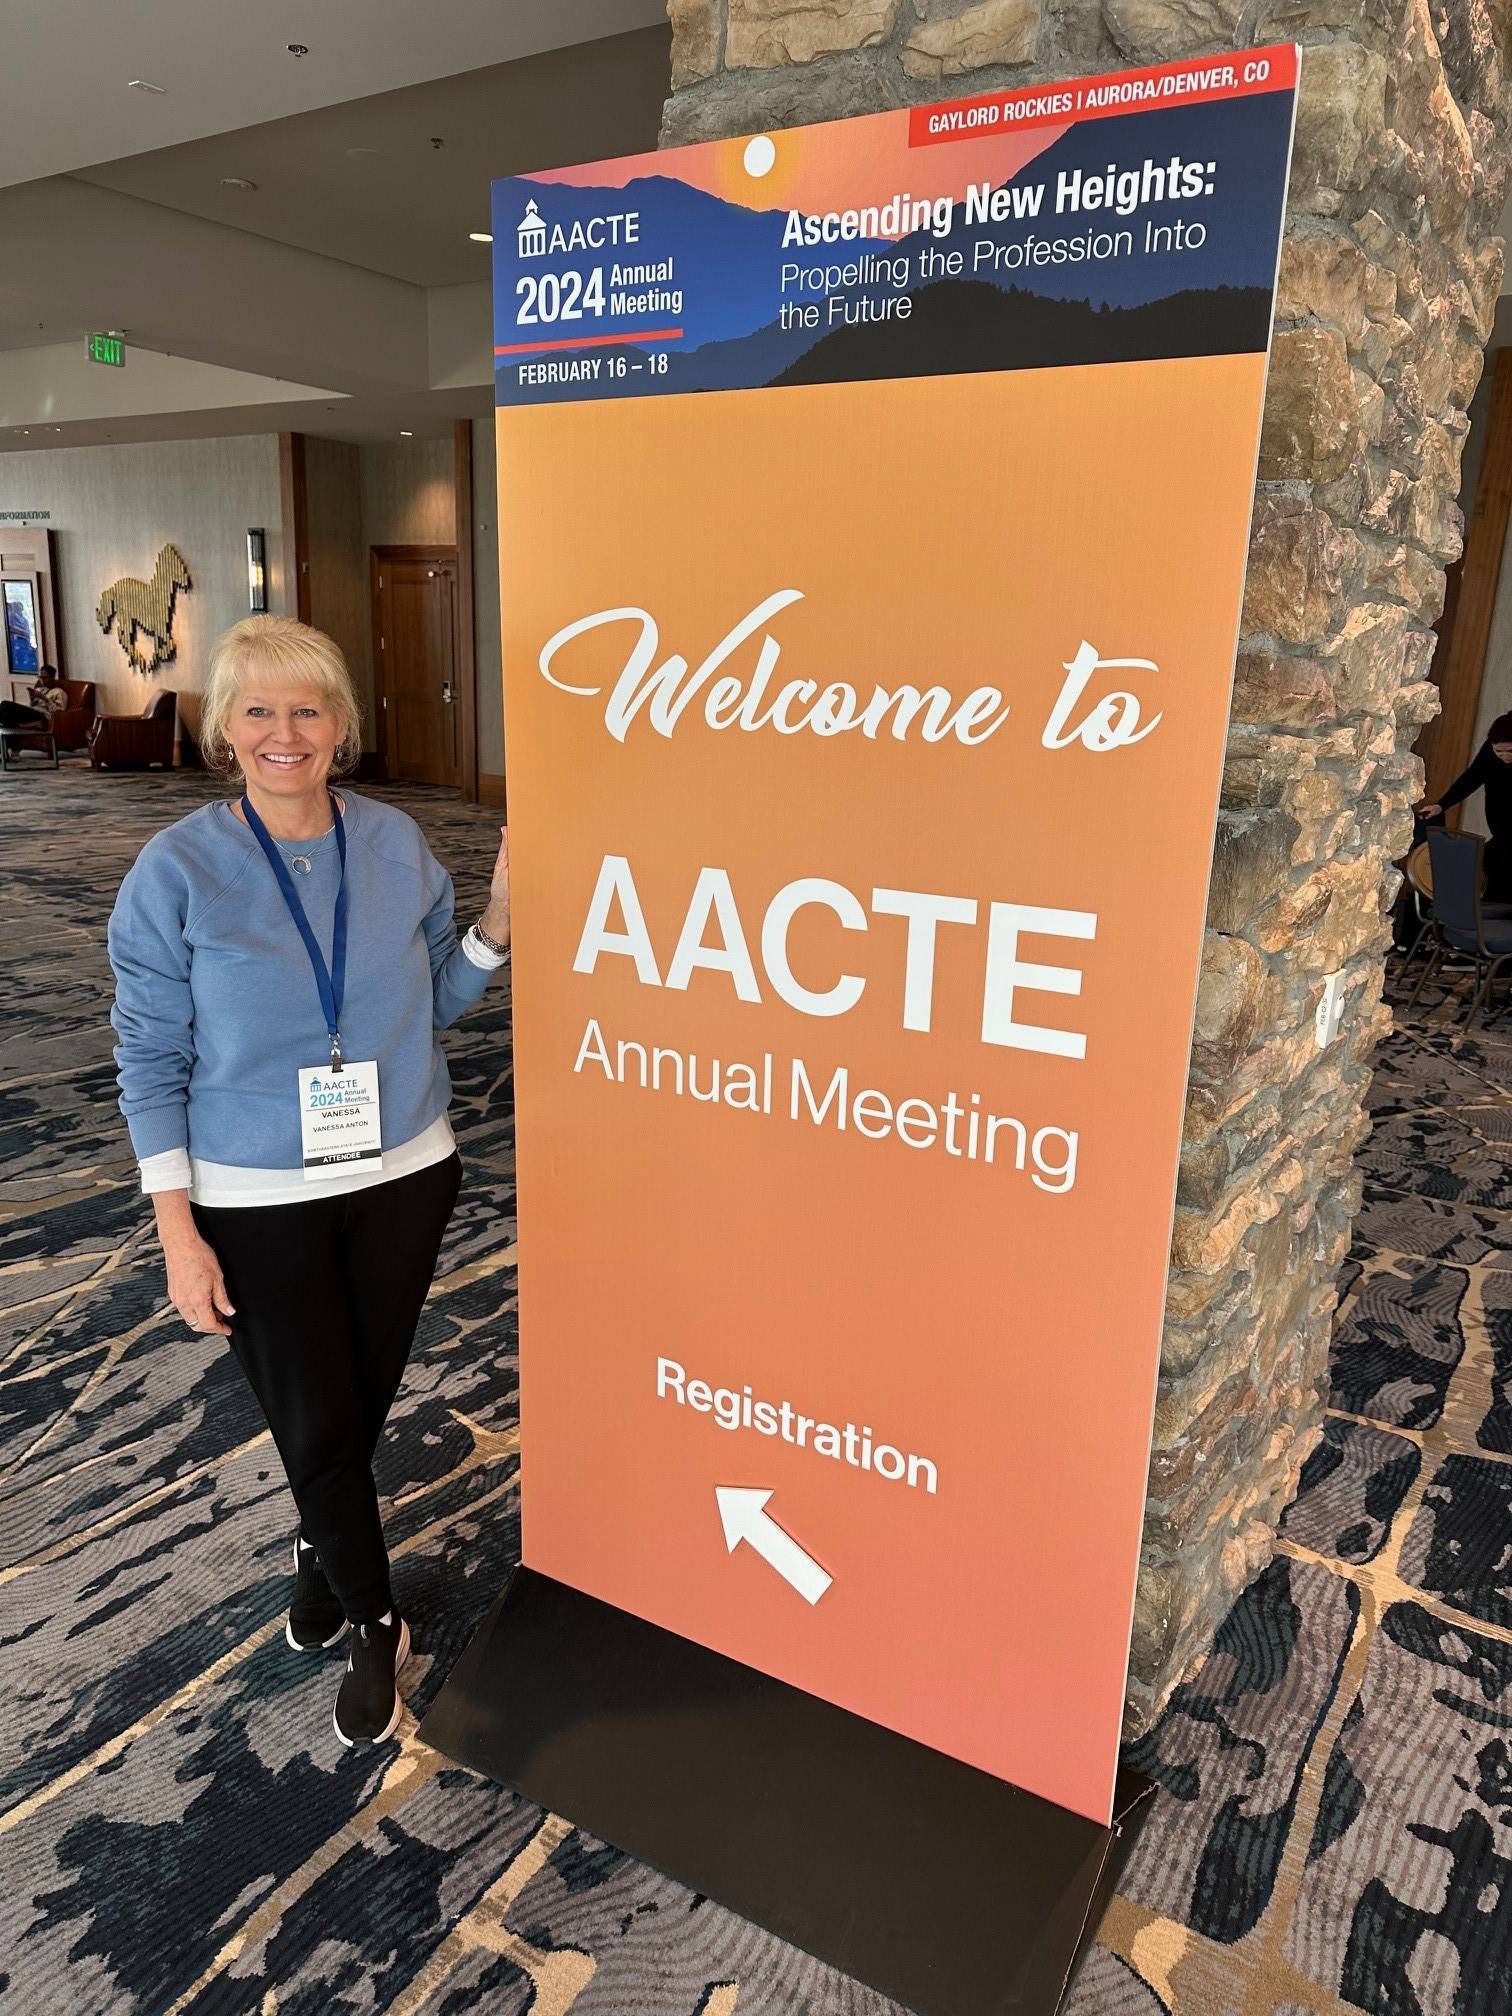 Dr. Anton at AACTE Meeting